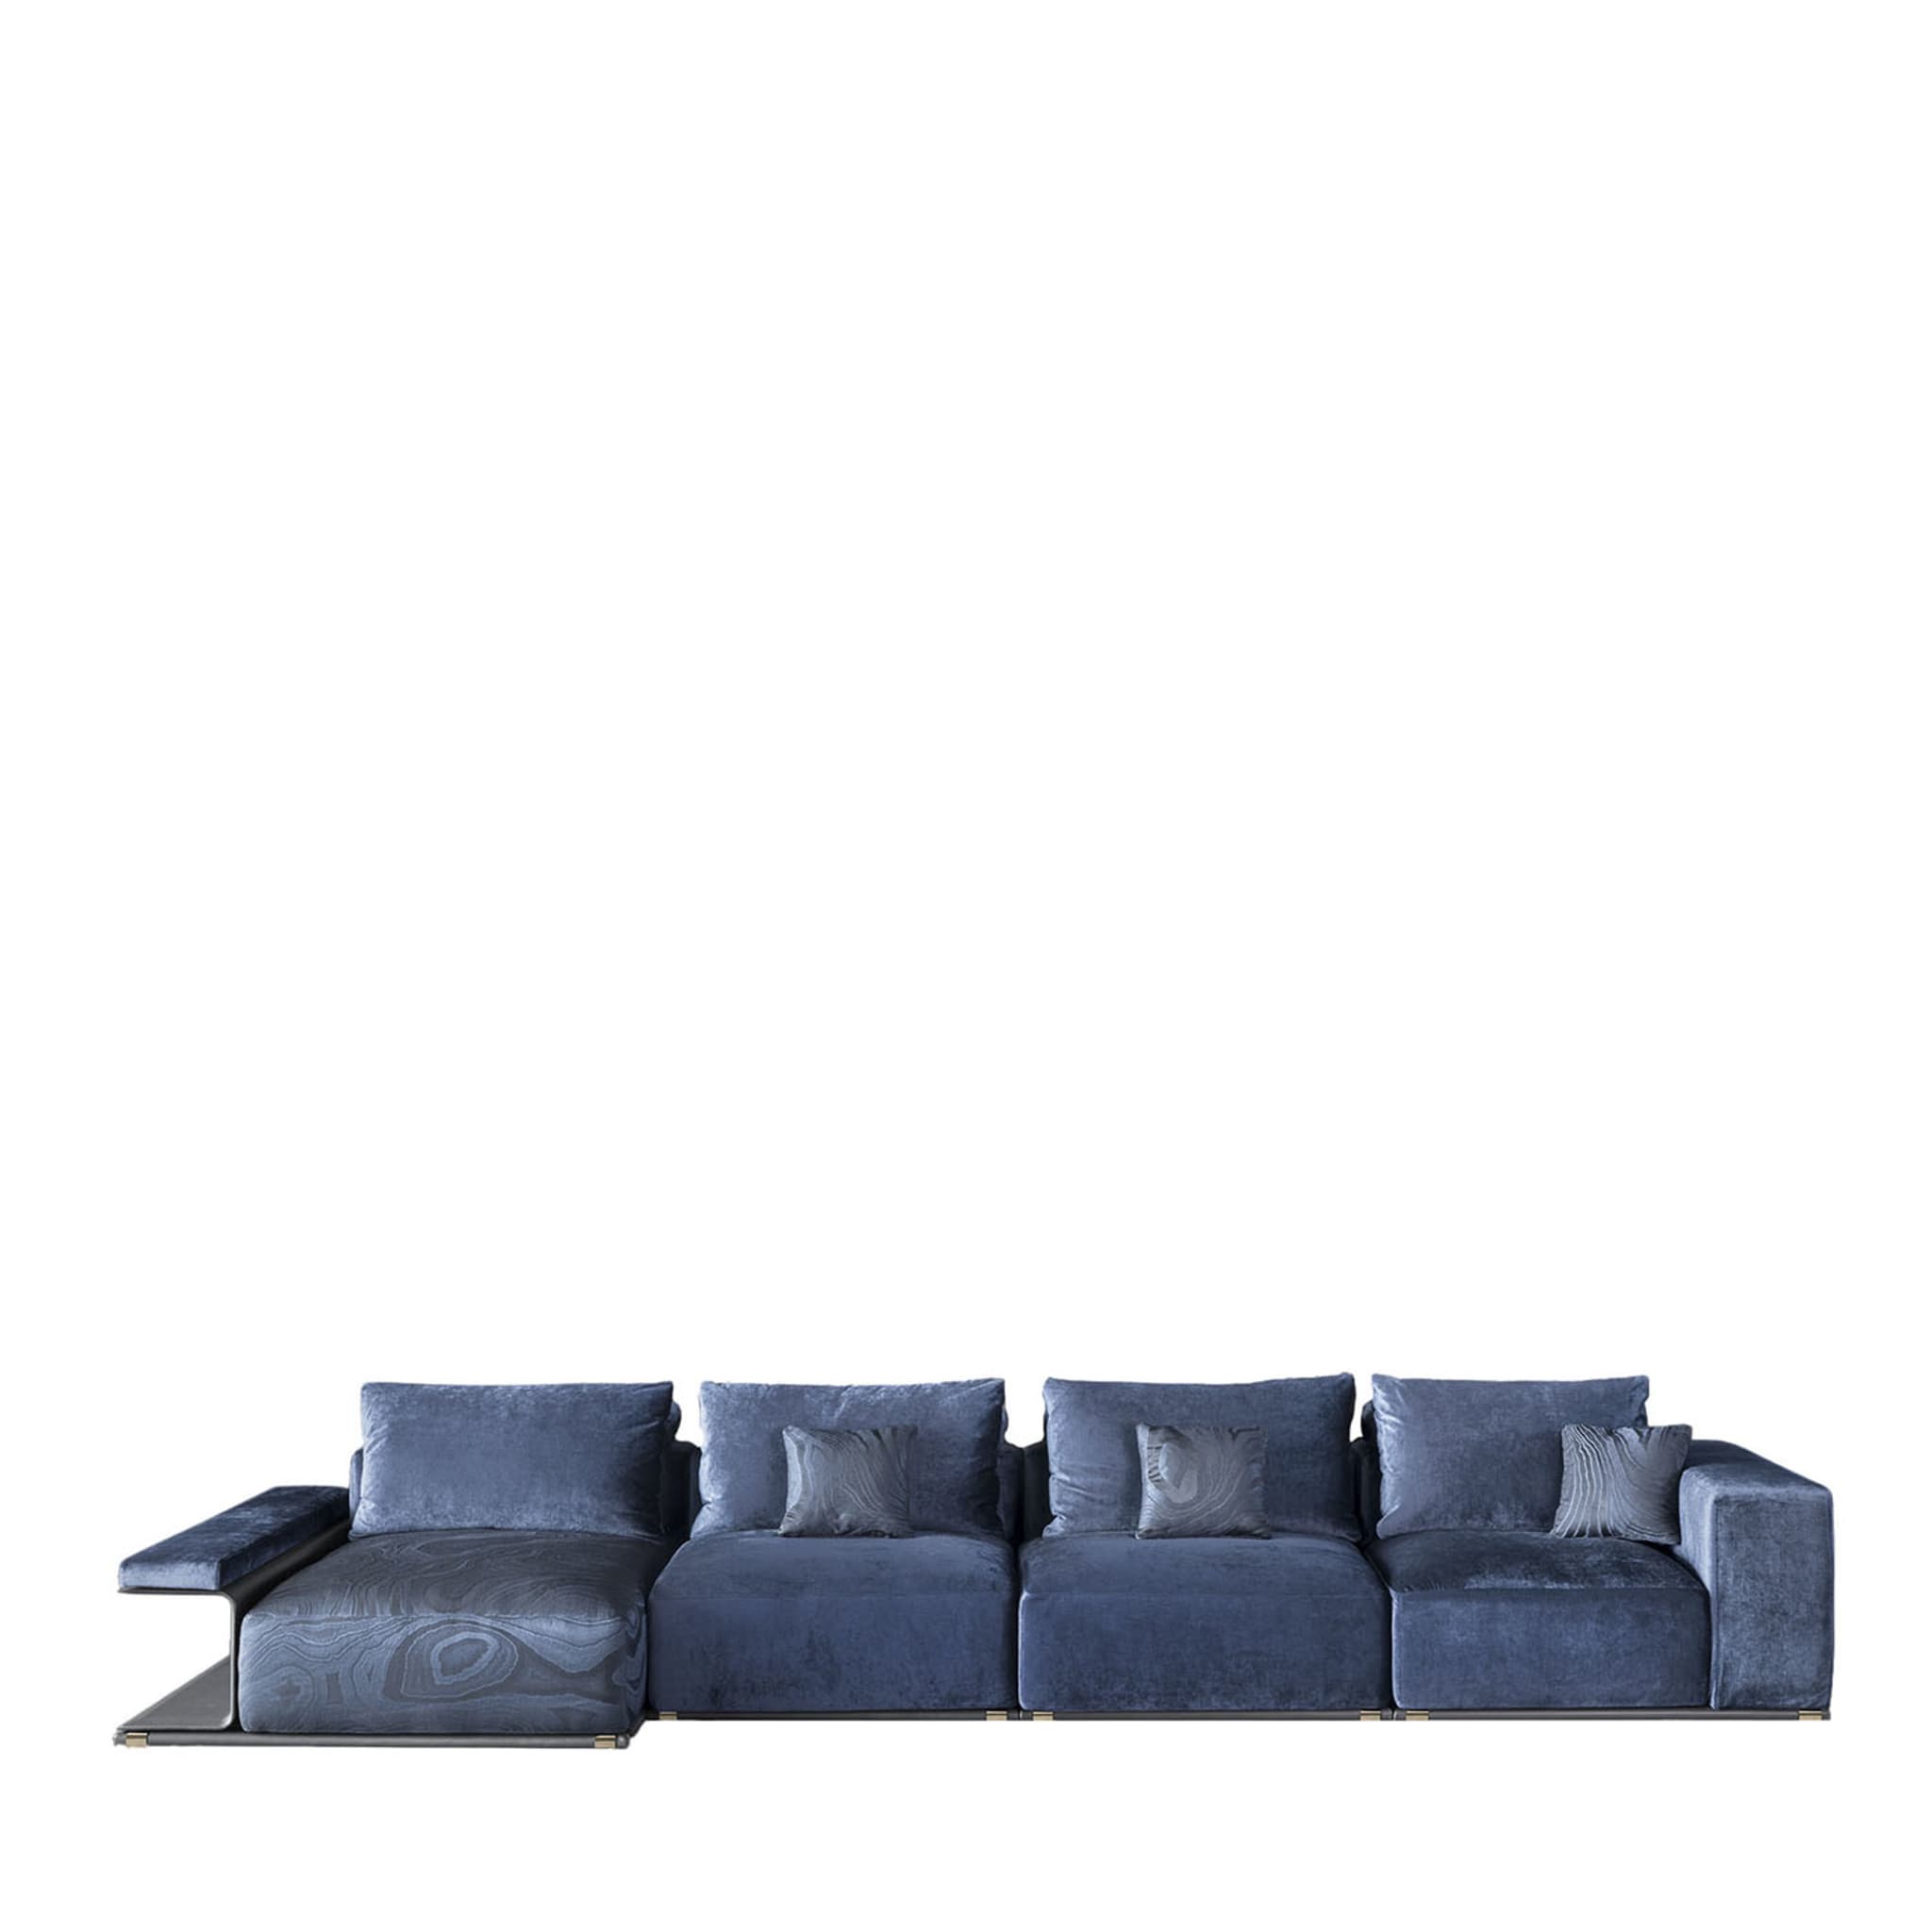 Zeno Modular Blaues Sofa #1 - Hauptansicht